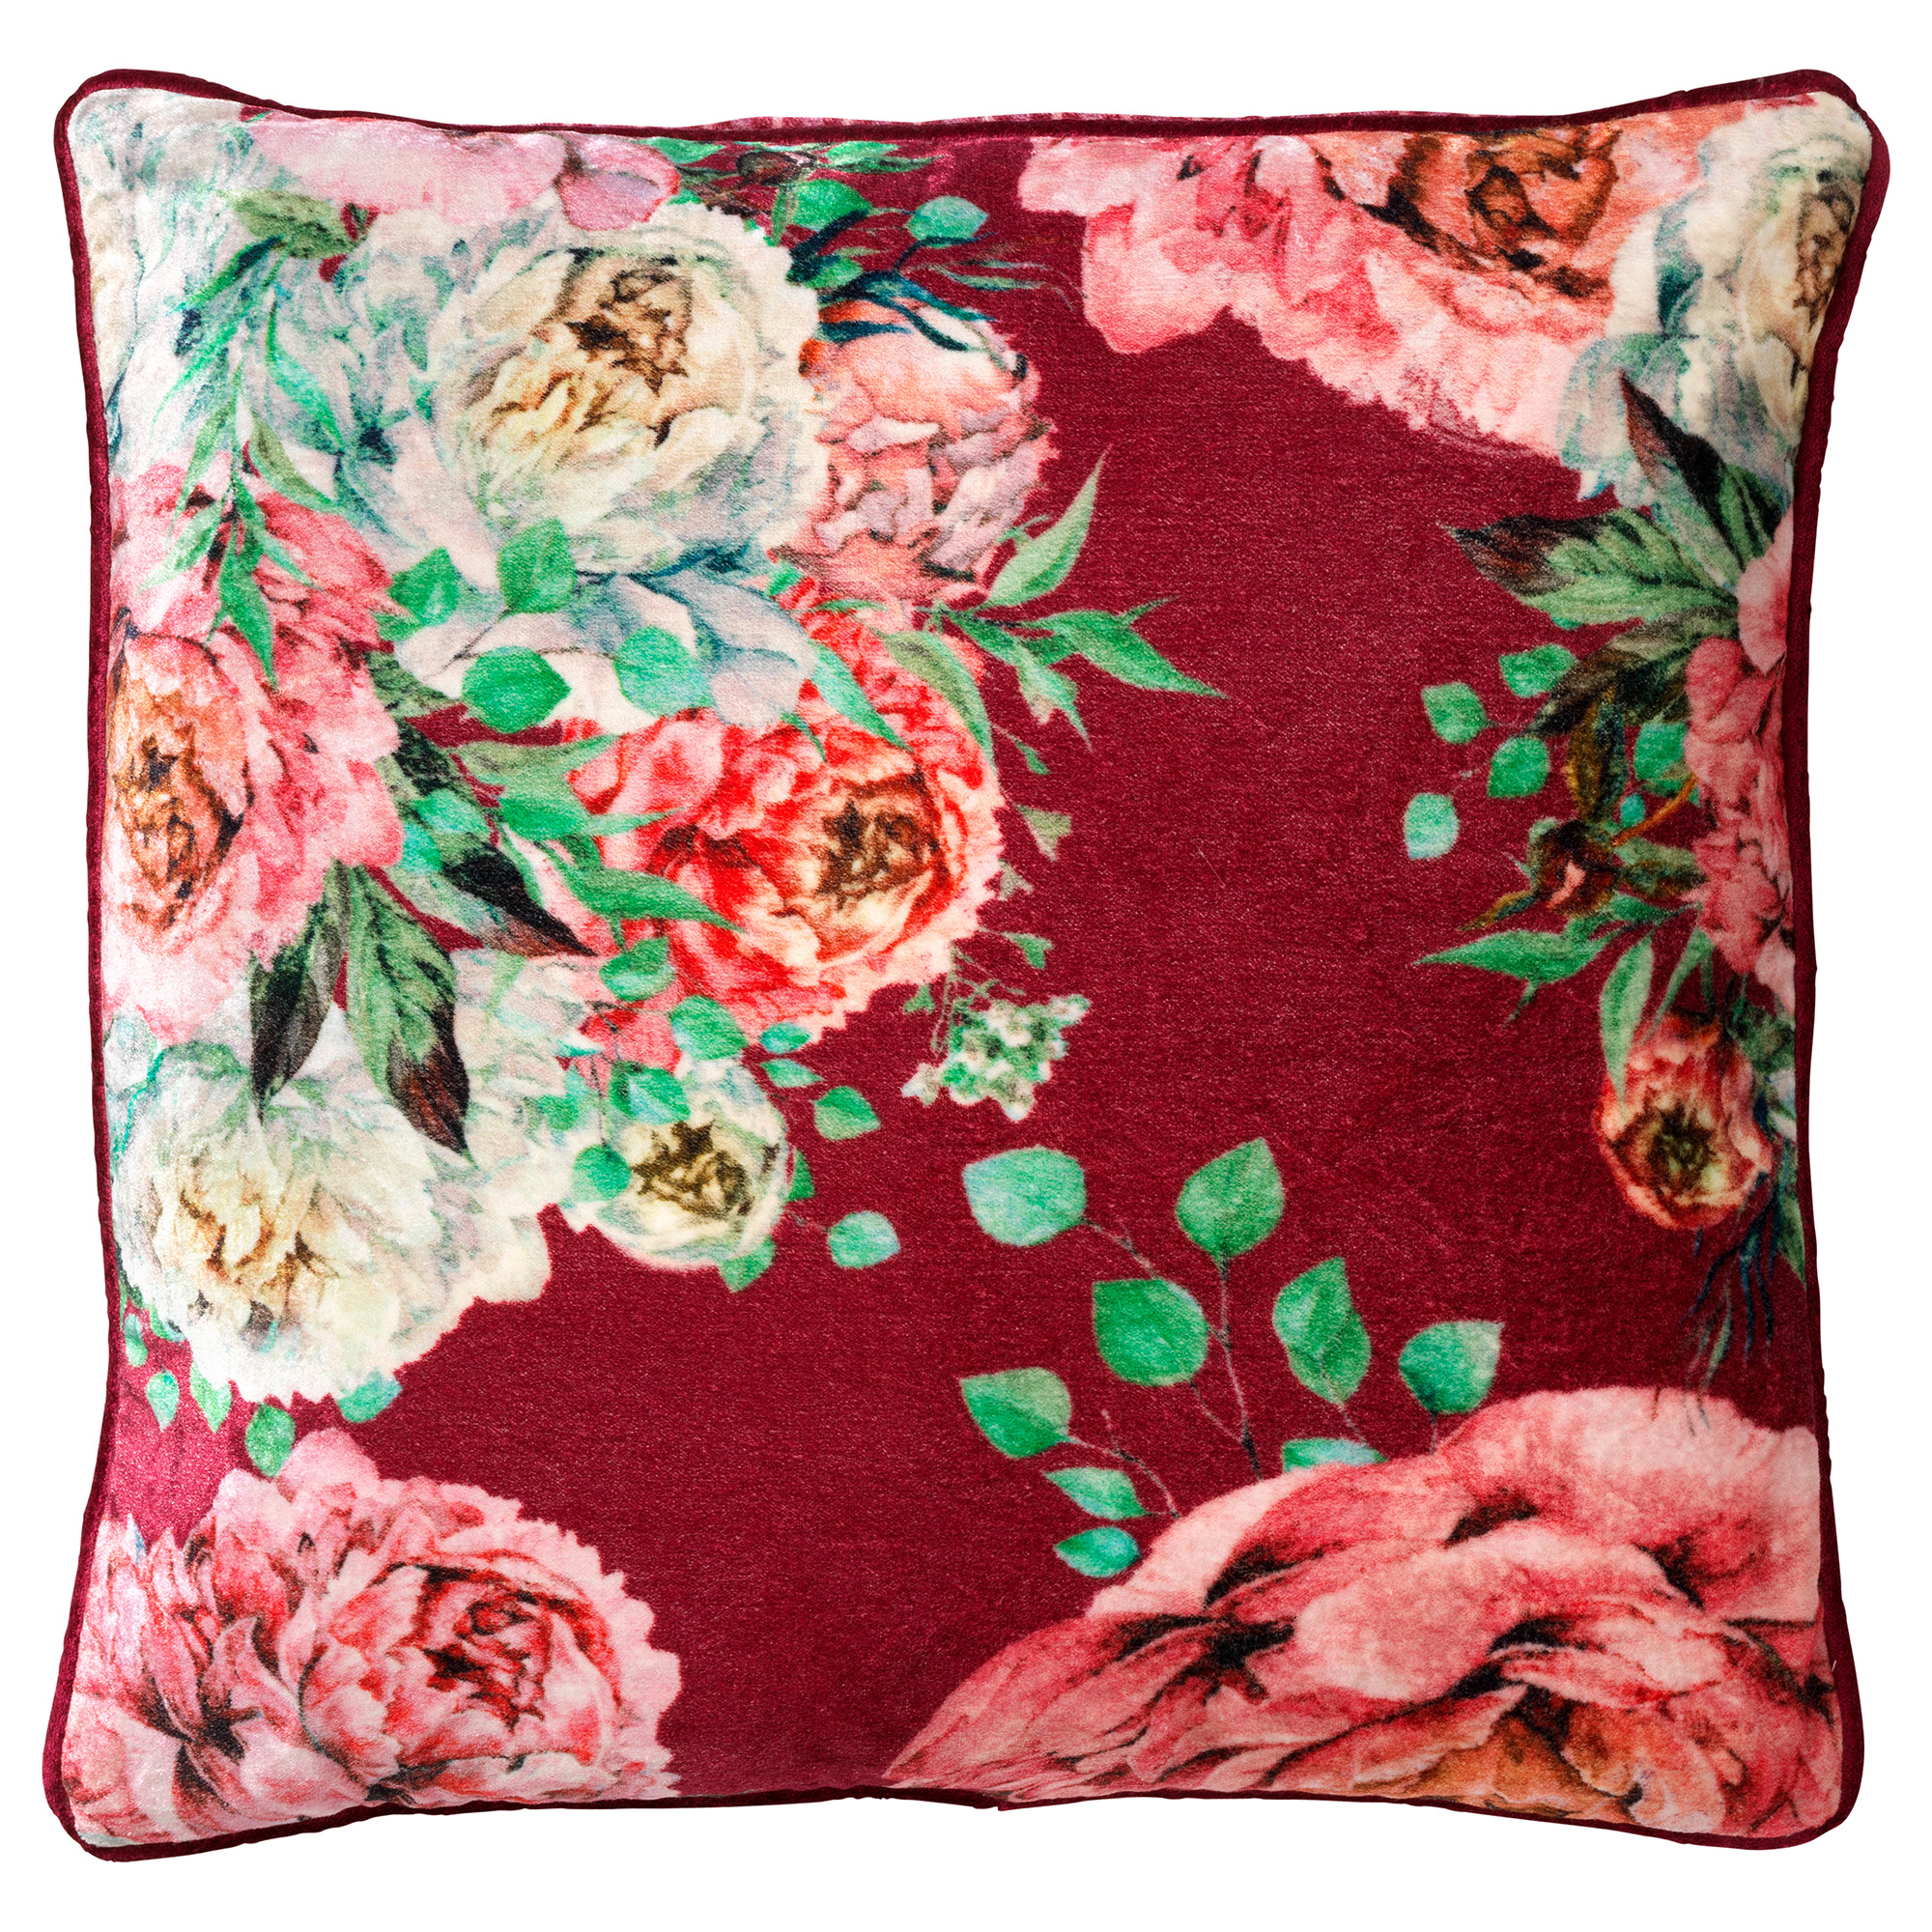 MINOU - Kussenhoes 45x45 cm - velvet - bloemen - red plum - roze - rood - groen - streepjes